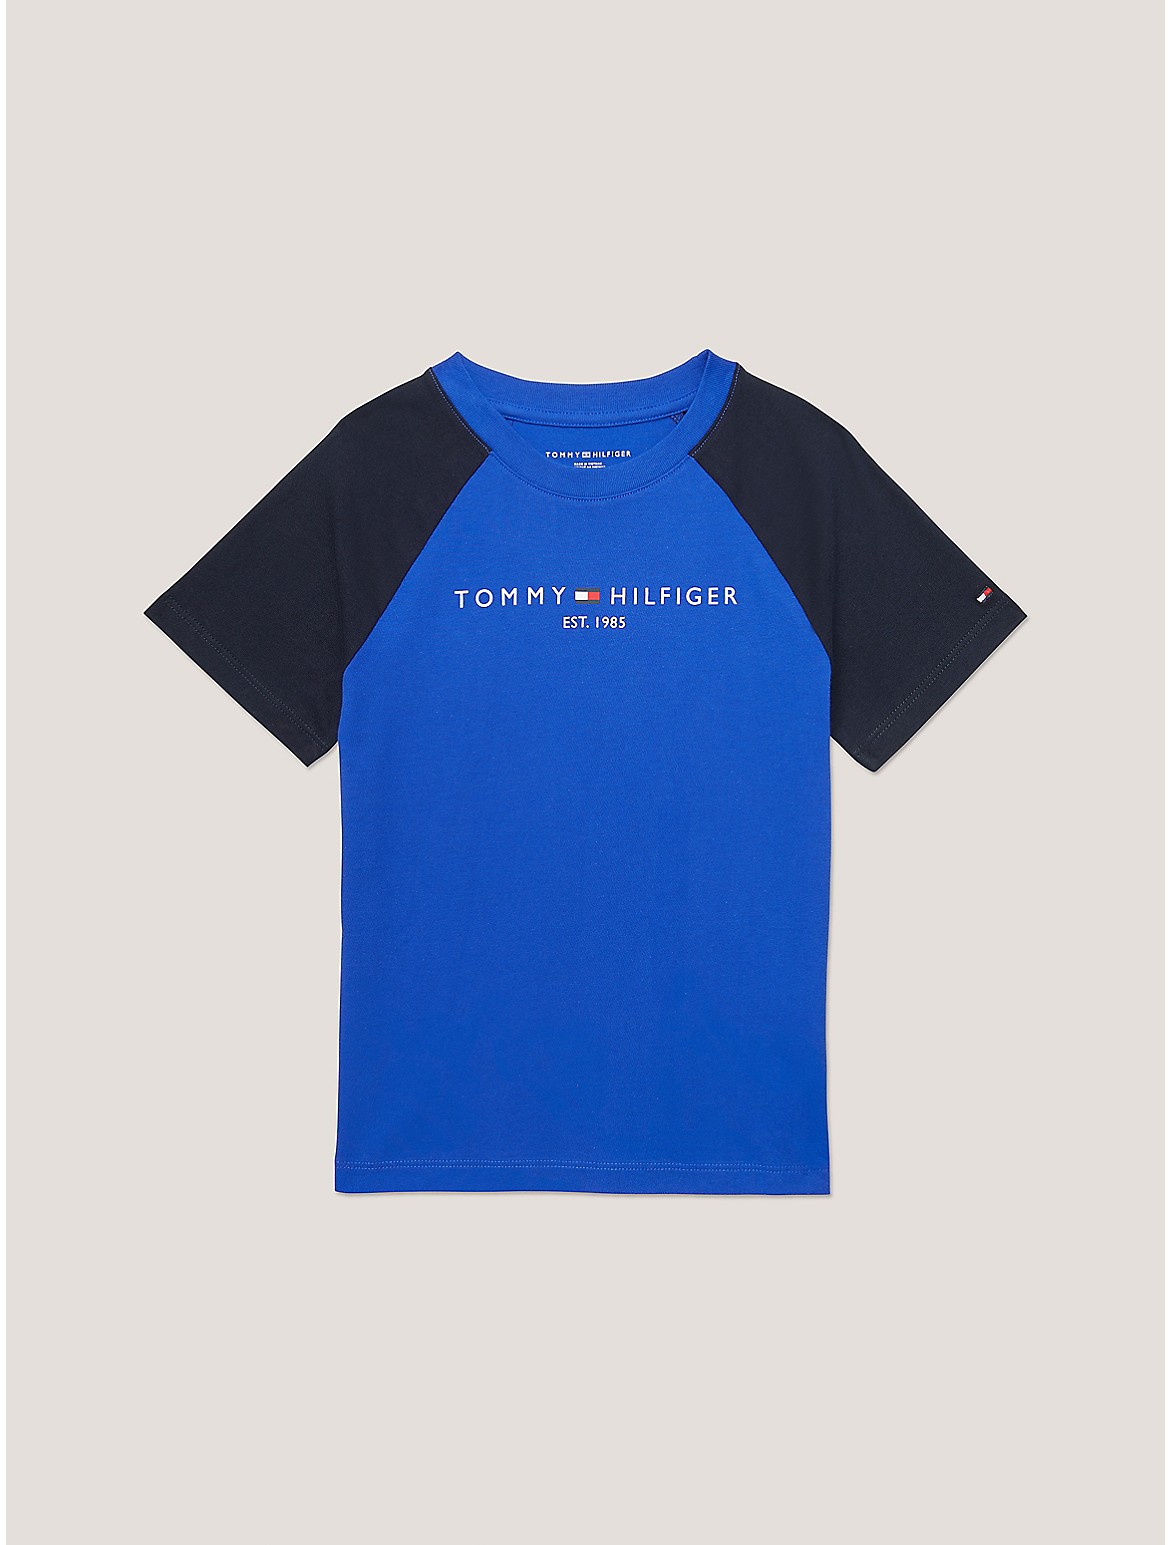 Tommy Hilfiger Boys' Kids' Baseball T-Shirt - Blue - L